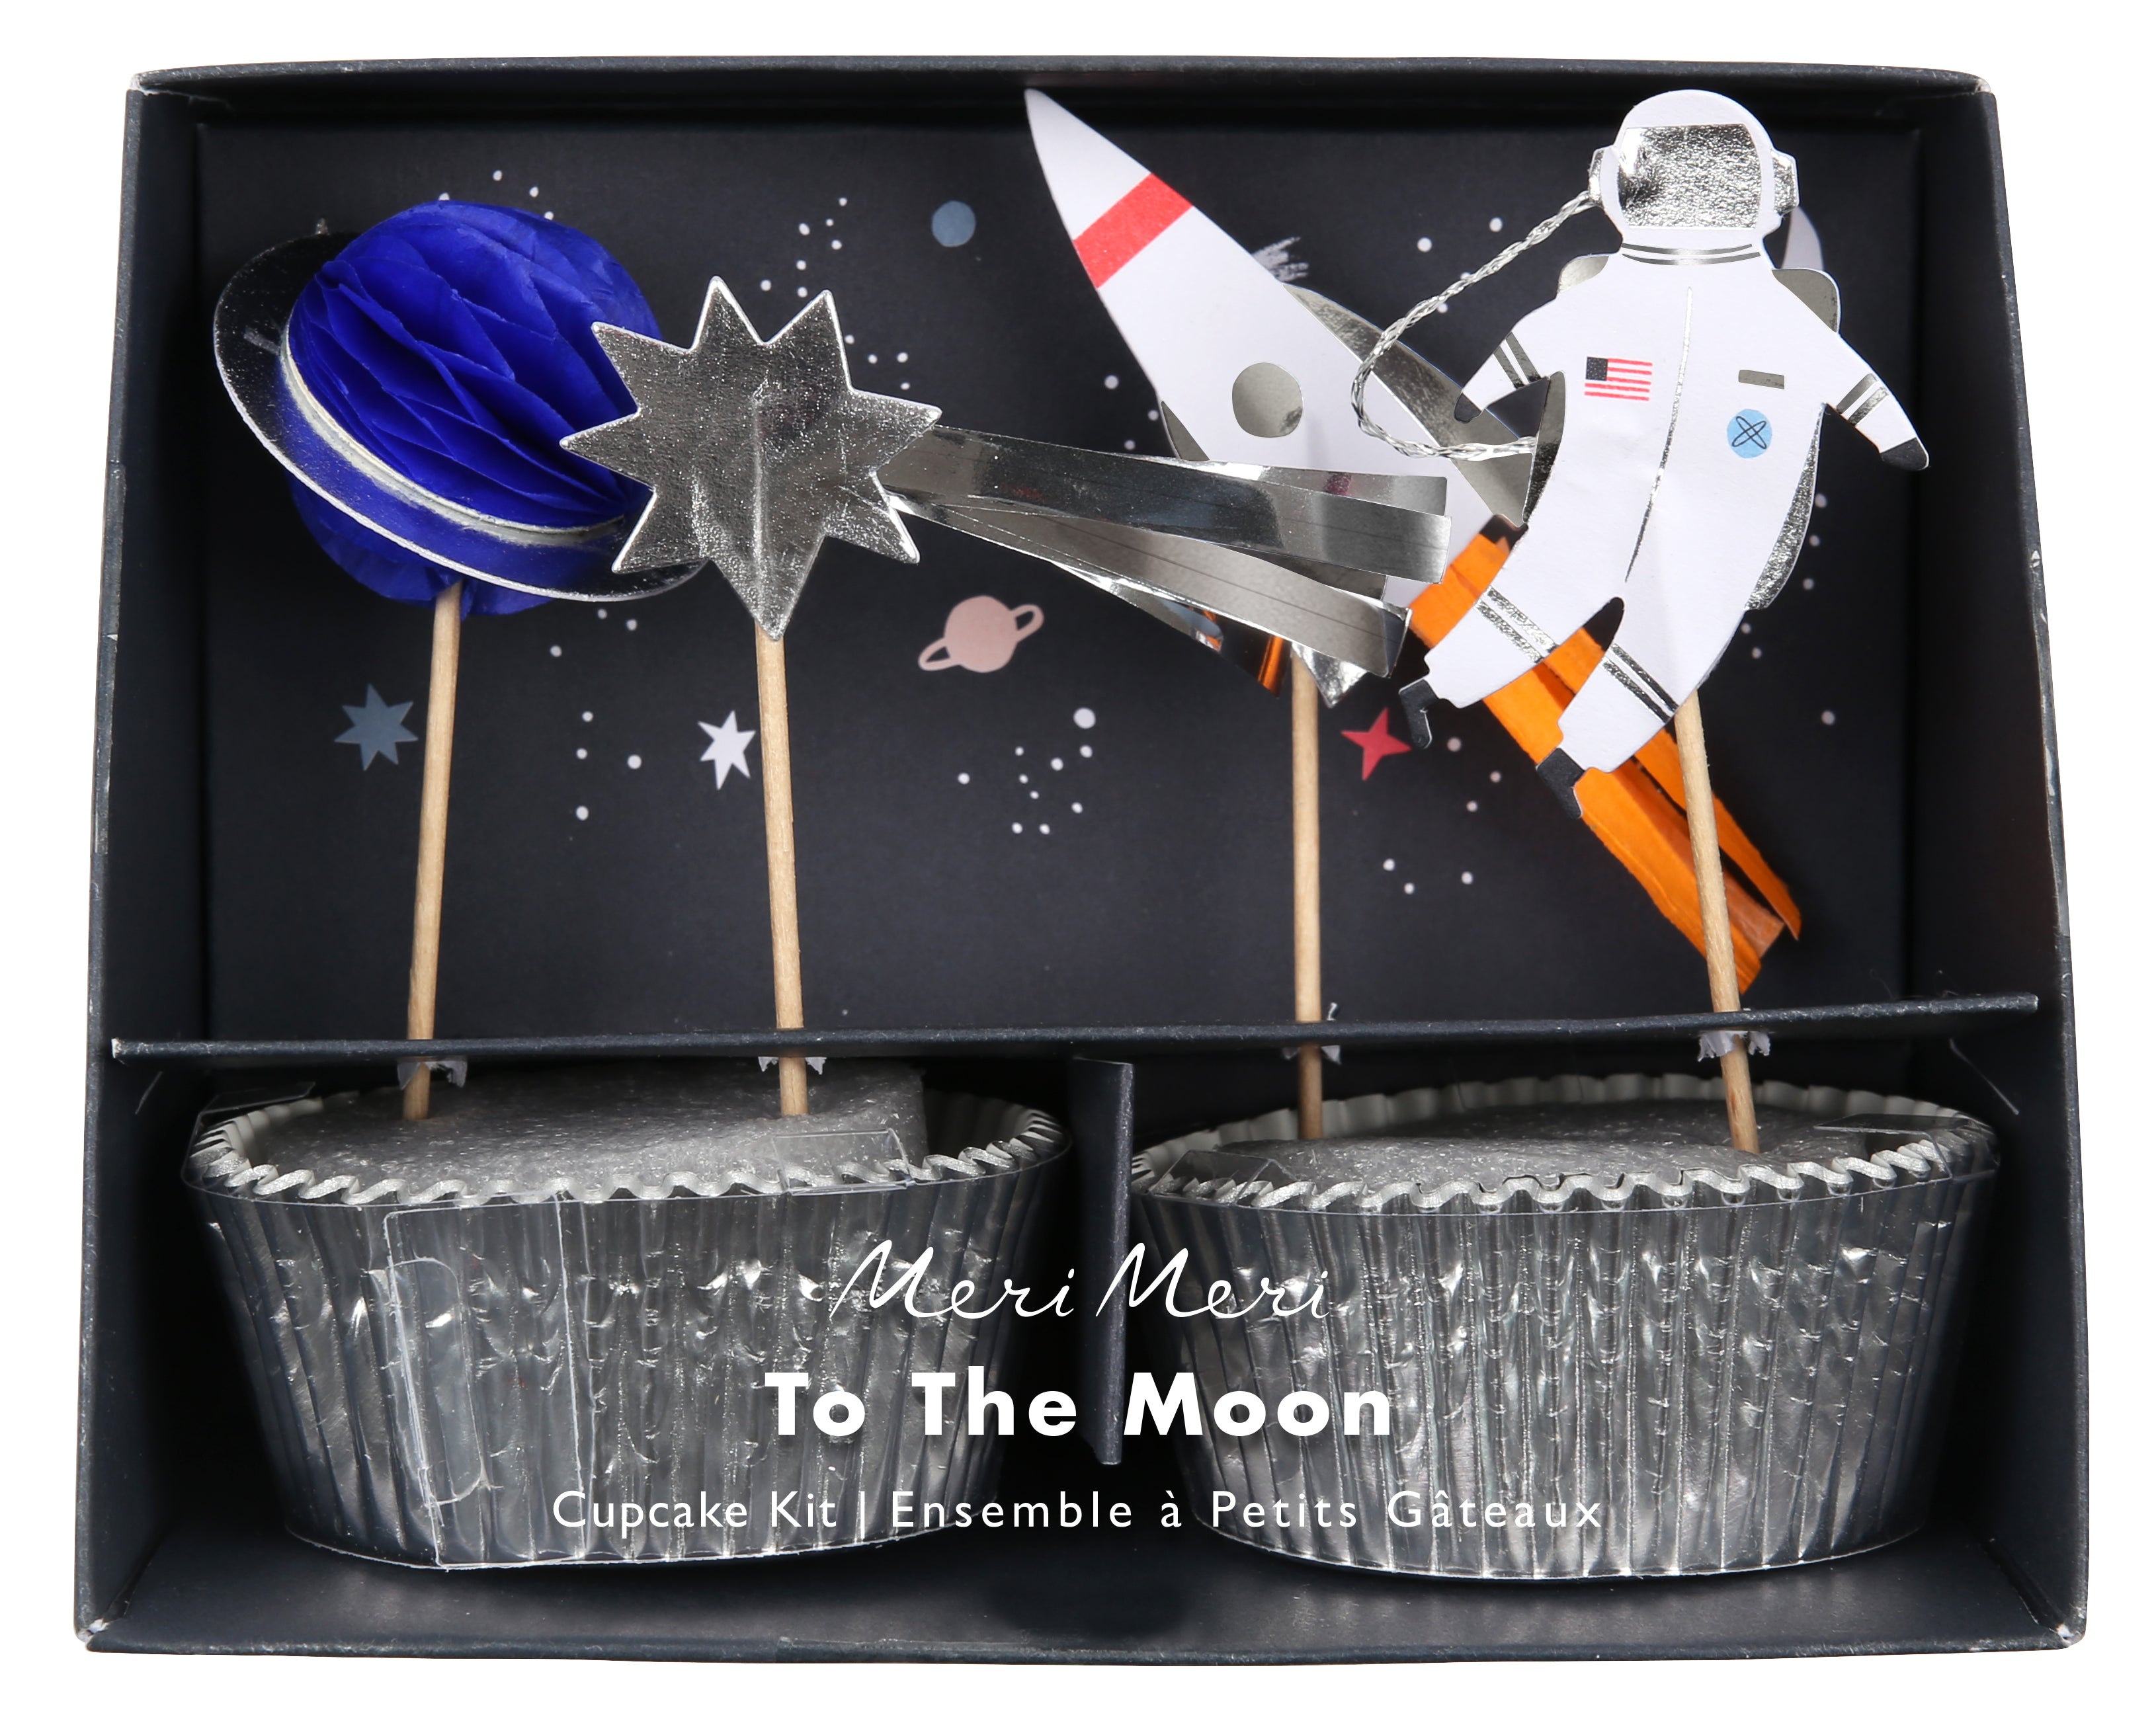 To The Moon Cupcake Kit